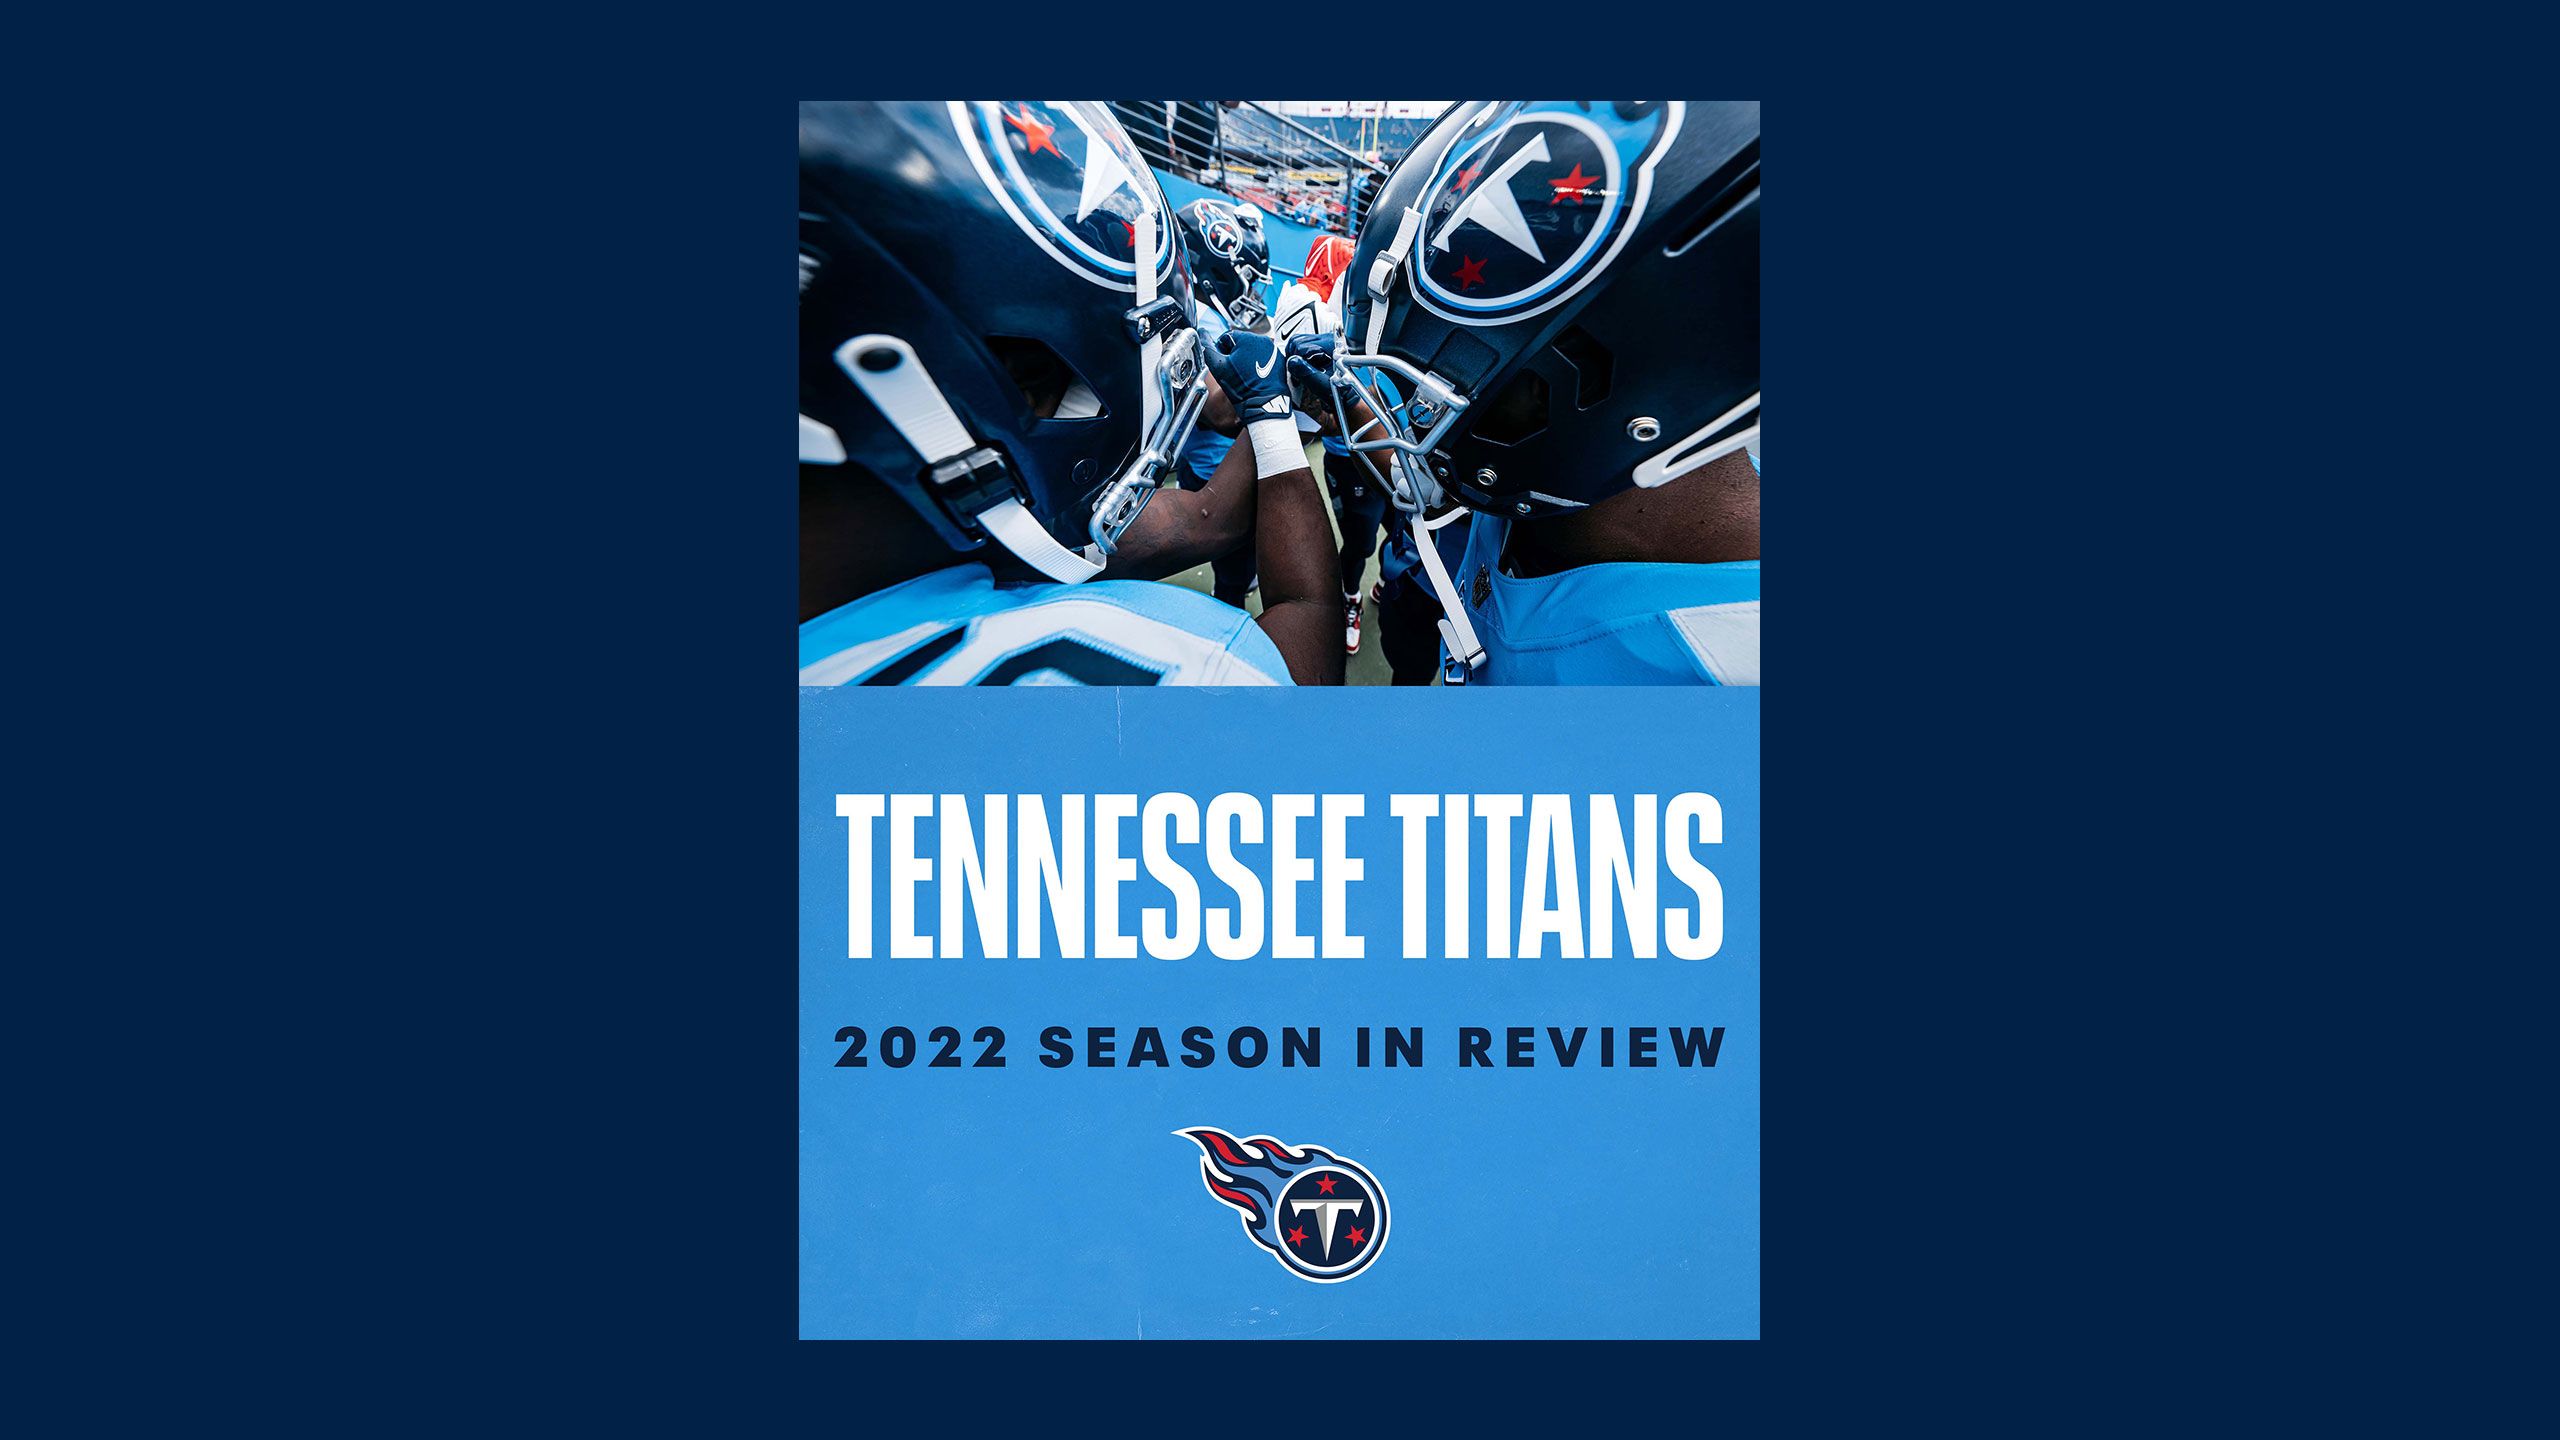 Titans Season Review Guides - Tennessee Titans - TitansOnline.com